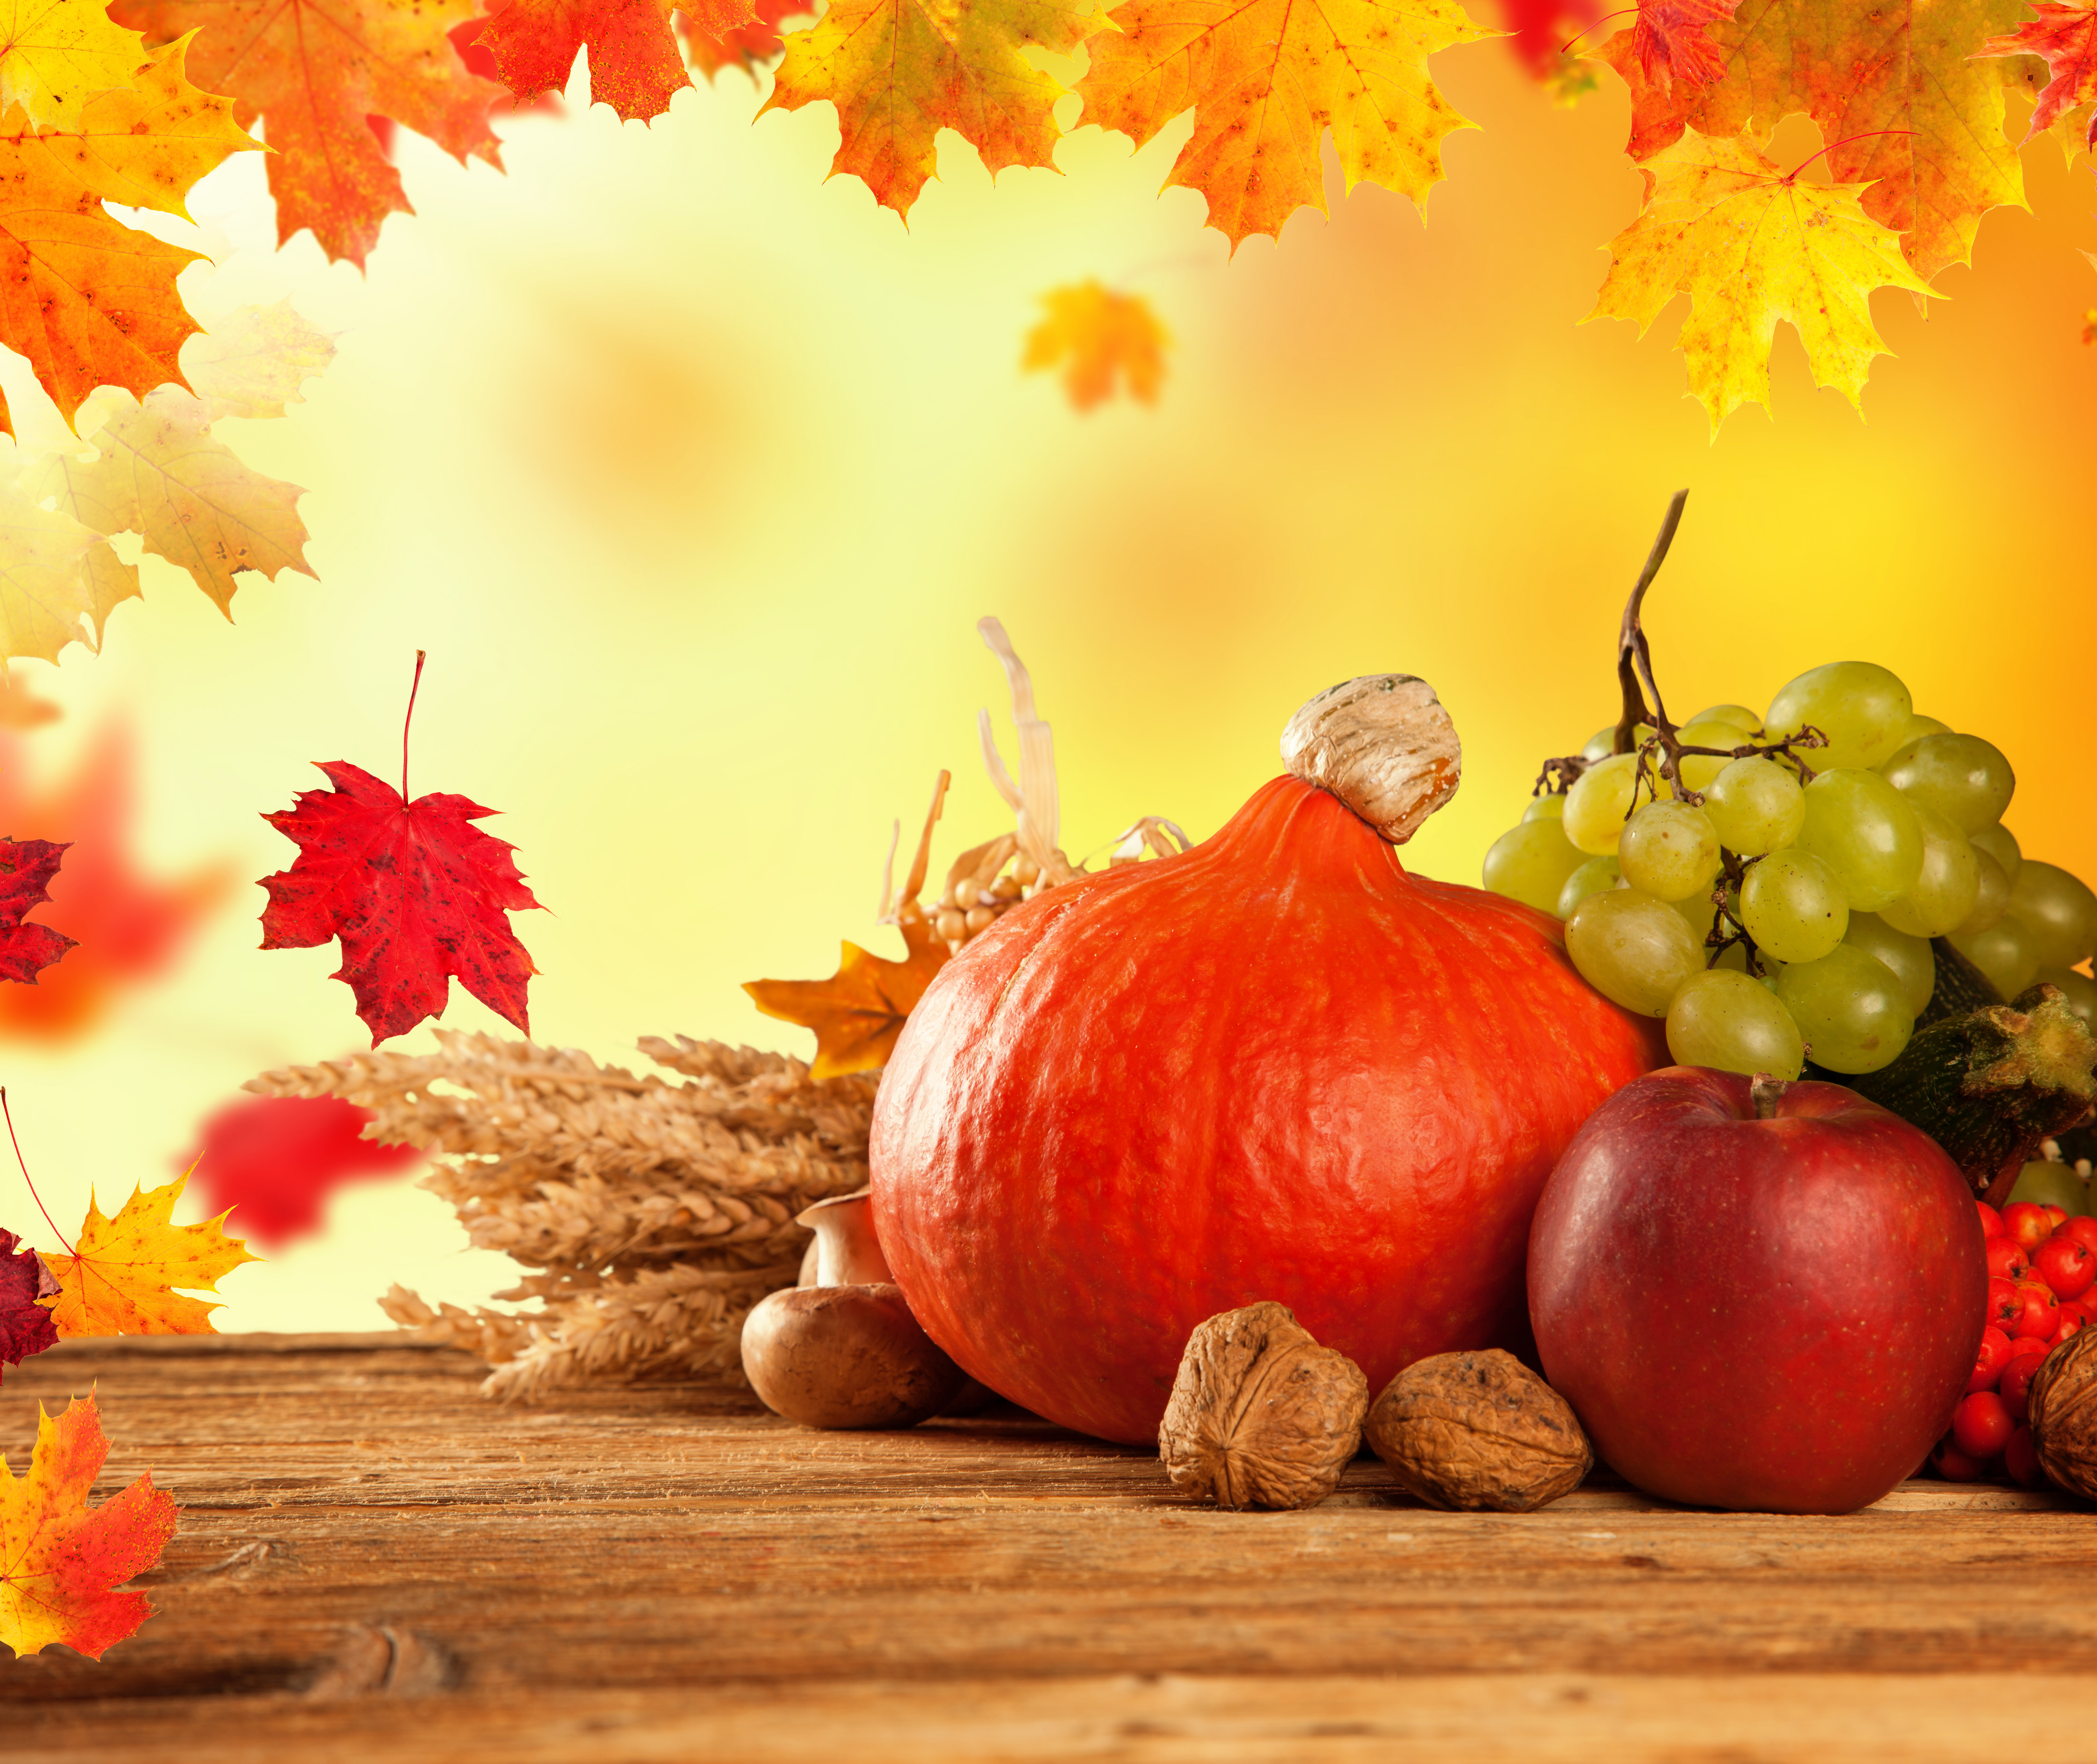 photography, still life, apple, fall, fruit, grapes, harvest, leaf, nut, pumpkin